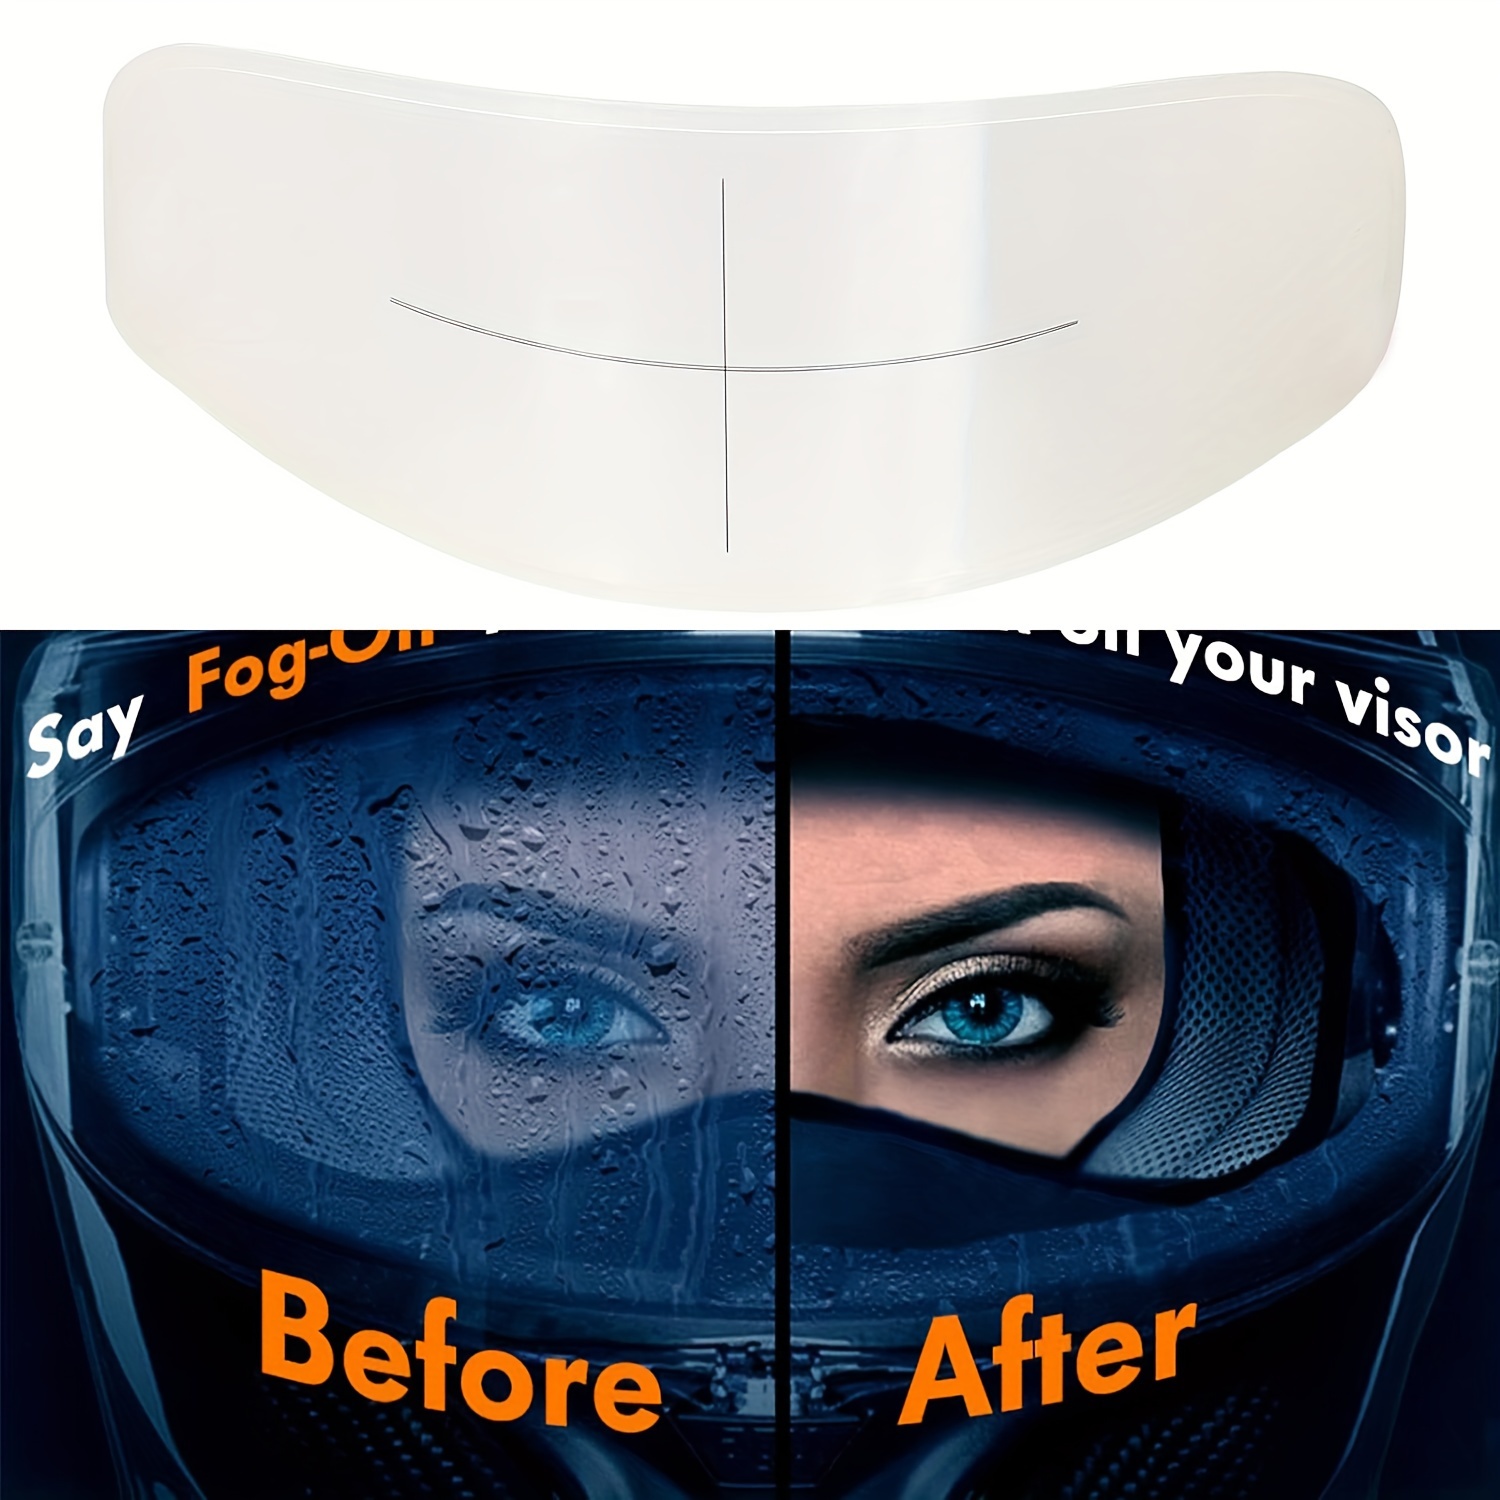 

Motorcycle Anti Fog Film And Rain Film Durable Nano Coating Sticker Film Helmet Accessories - Universal Fit Helmet Visors Fog Resistant Clear Lens Insert